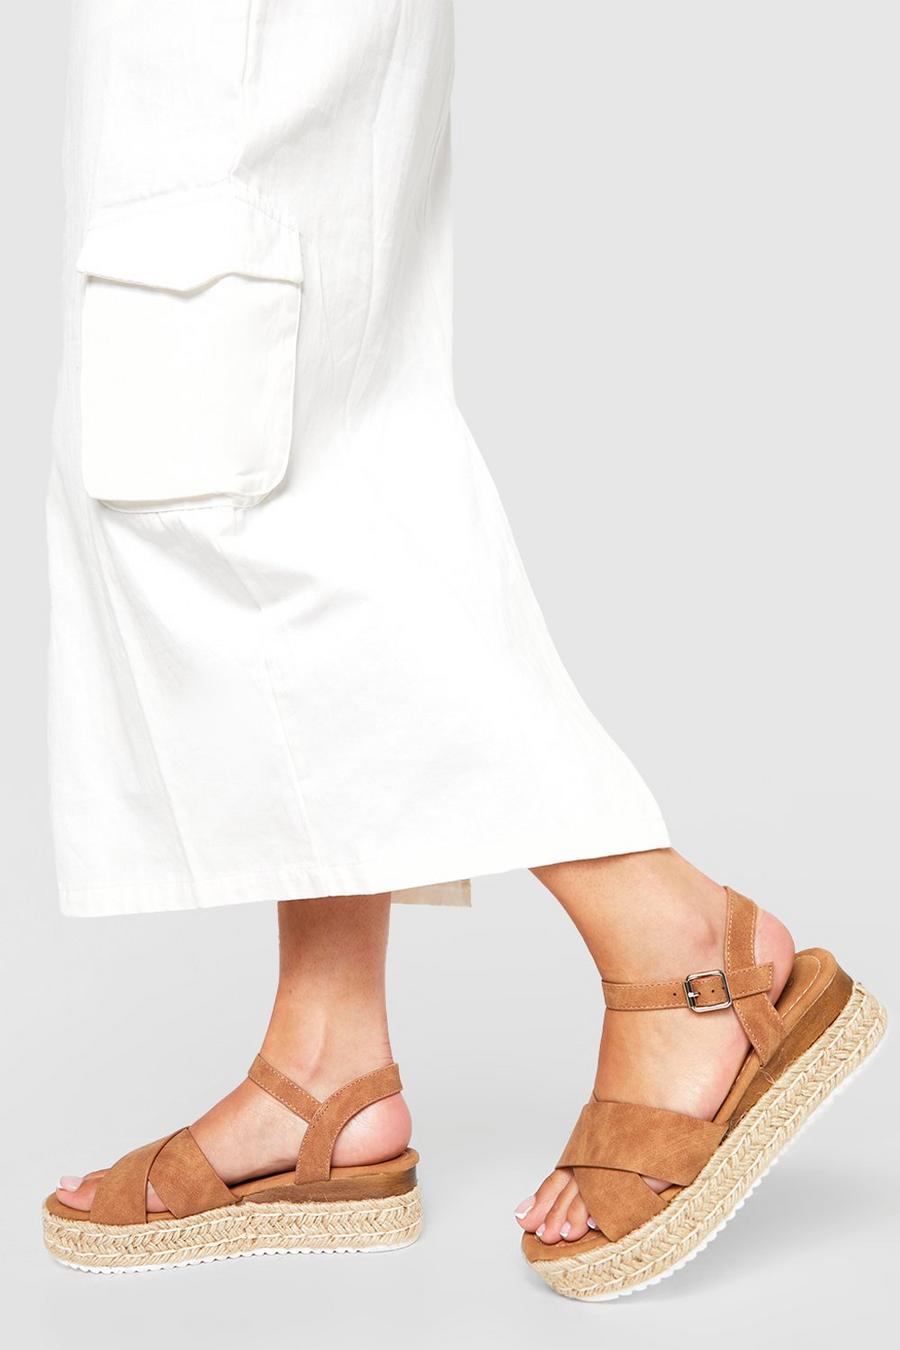 Sandali Flatform a calzata ampia con fascette incrociate, Tan image number 1